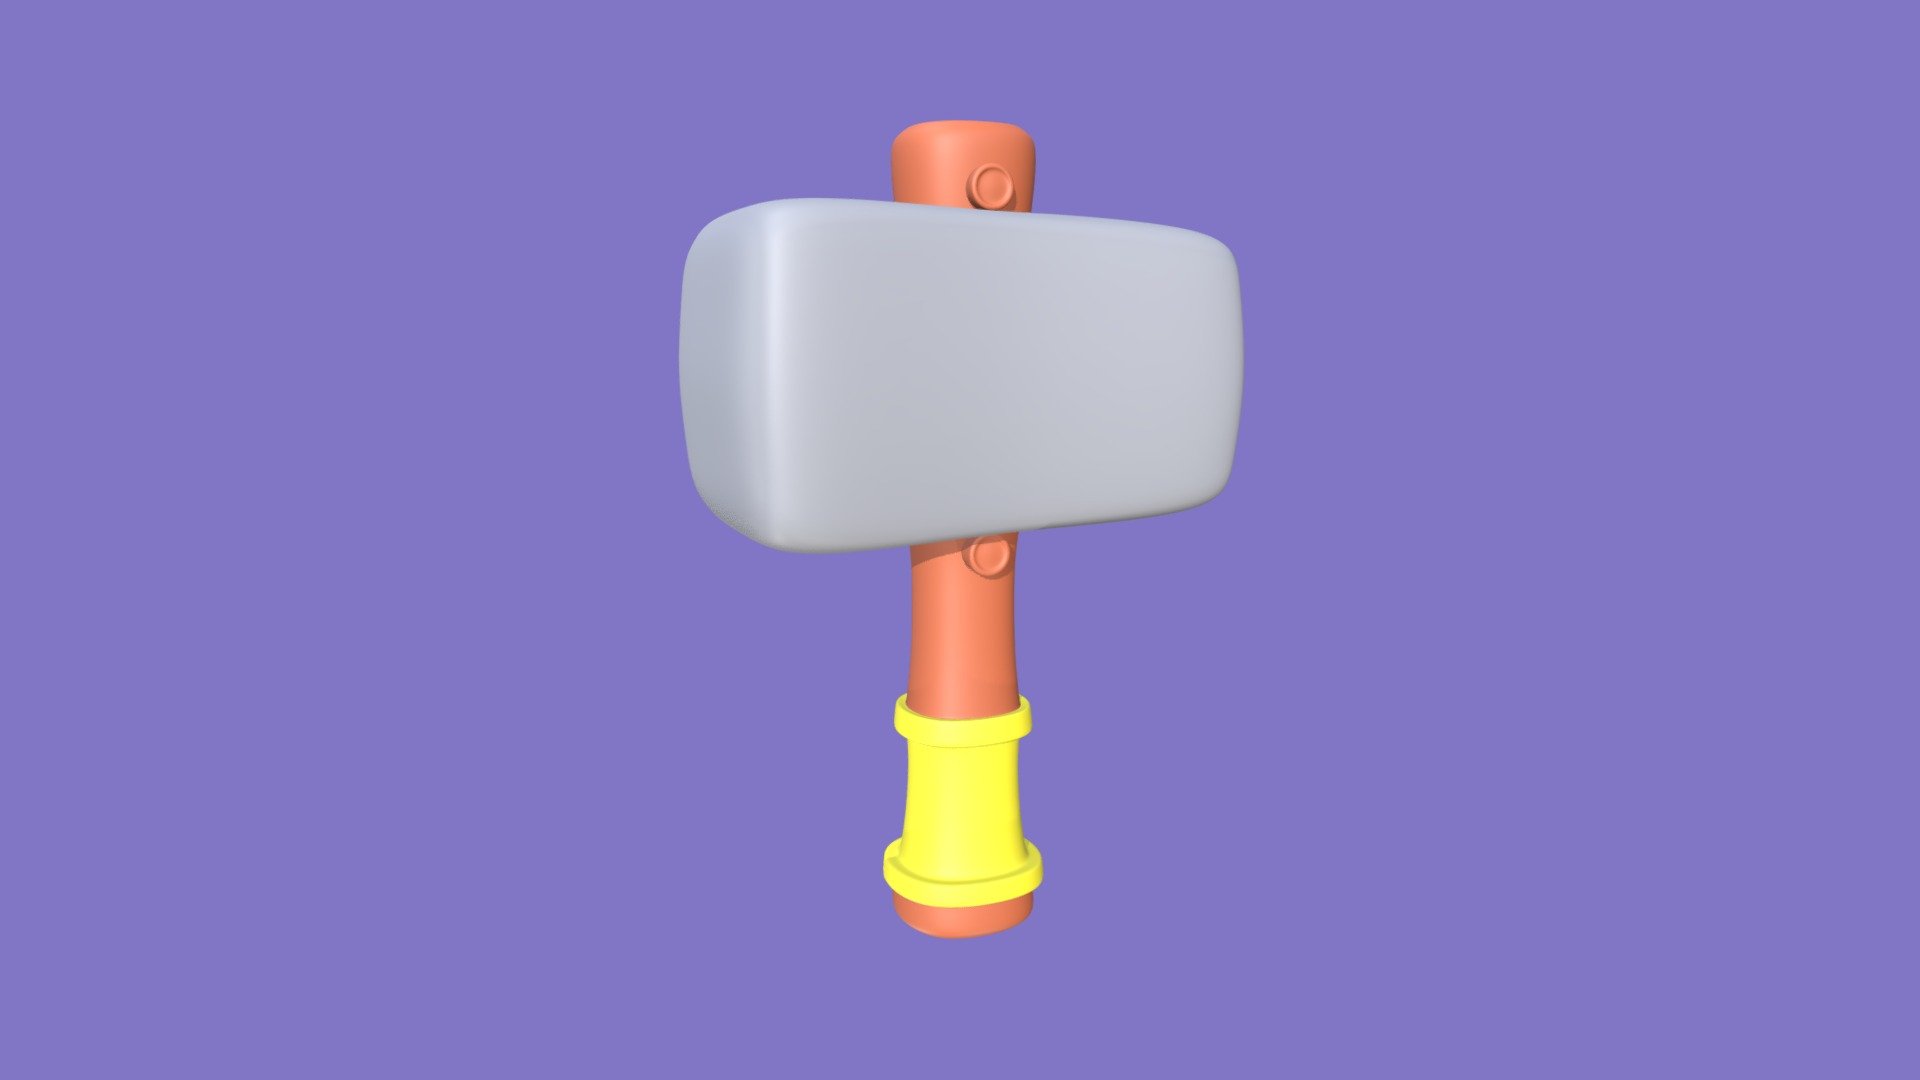 A simple cartoon hammer 3d model